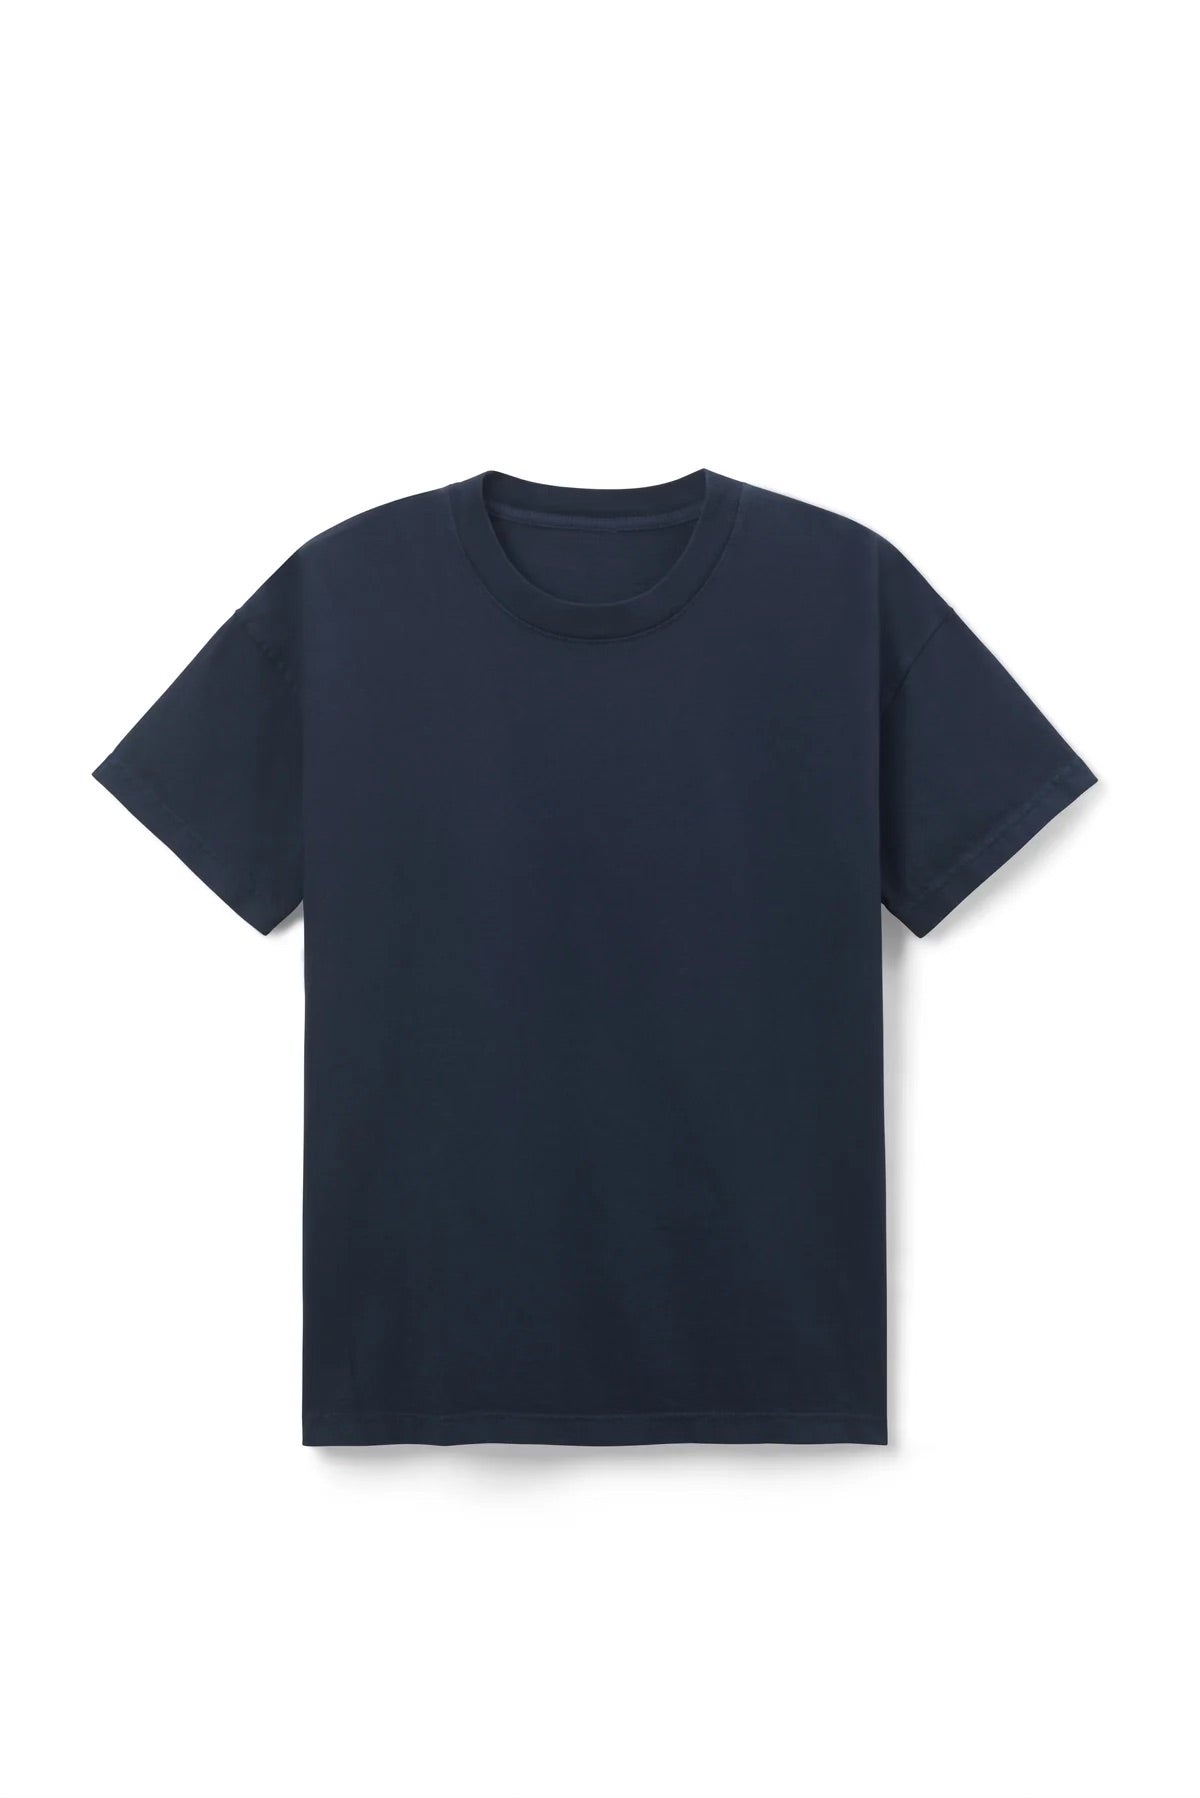 Unisex Dropped Shoulder T Shirt